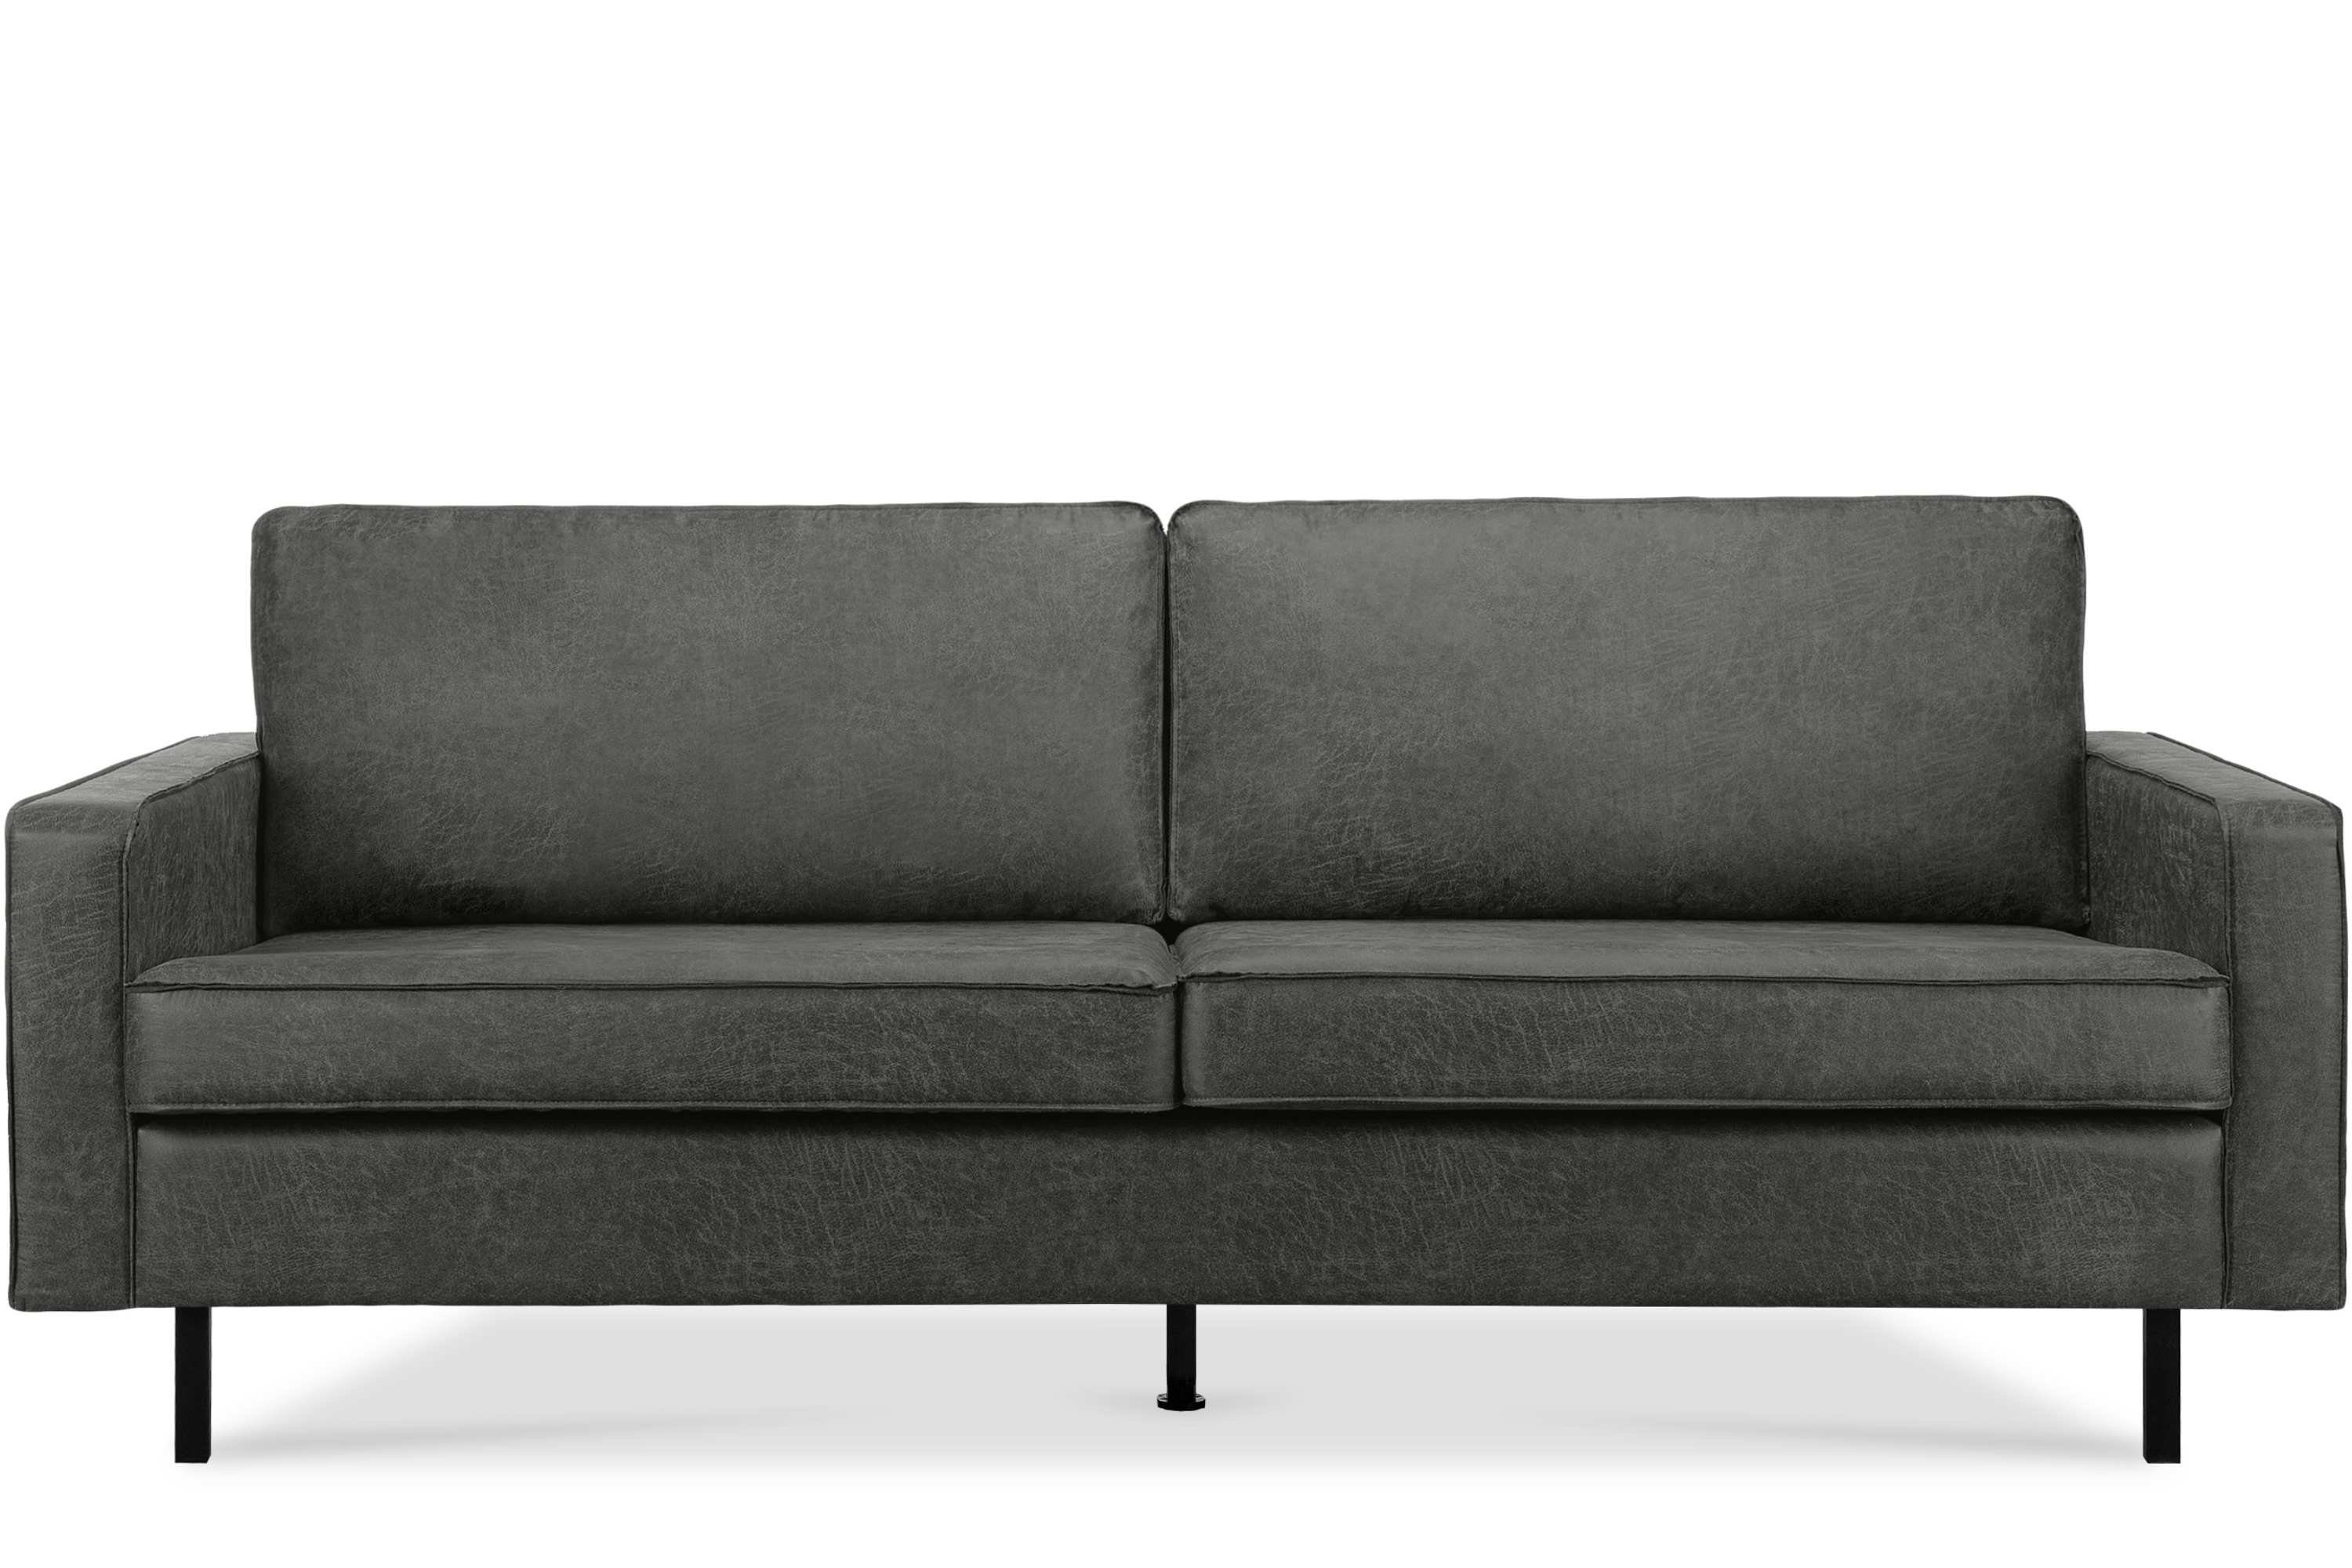 Konsimo 3-Sitzer INVIA Dreisitzer-Sofa, hohen dunkelgrau Echtleder, auf | dunkelgrau | EU Hergestellt Grundschicht: dunkelgrau Metallfüßen, in